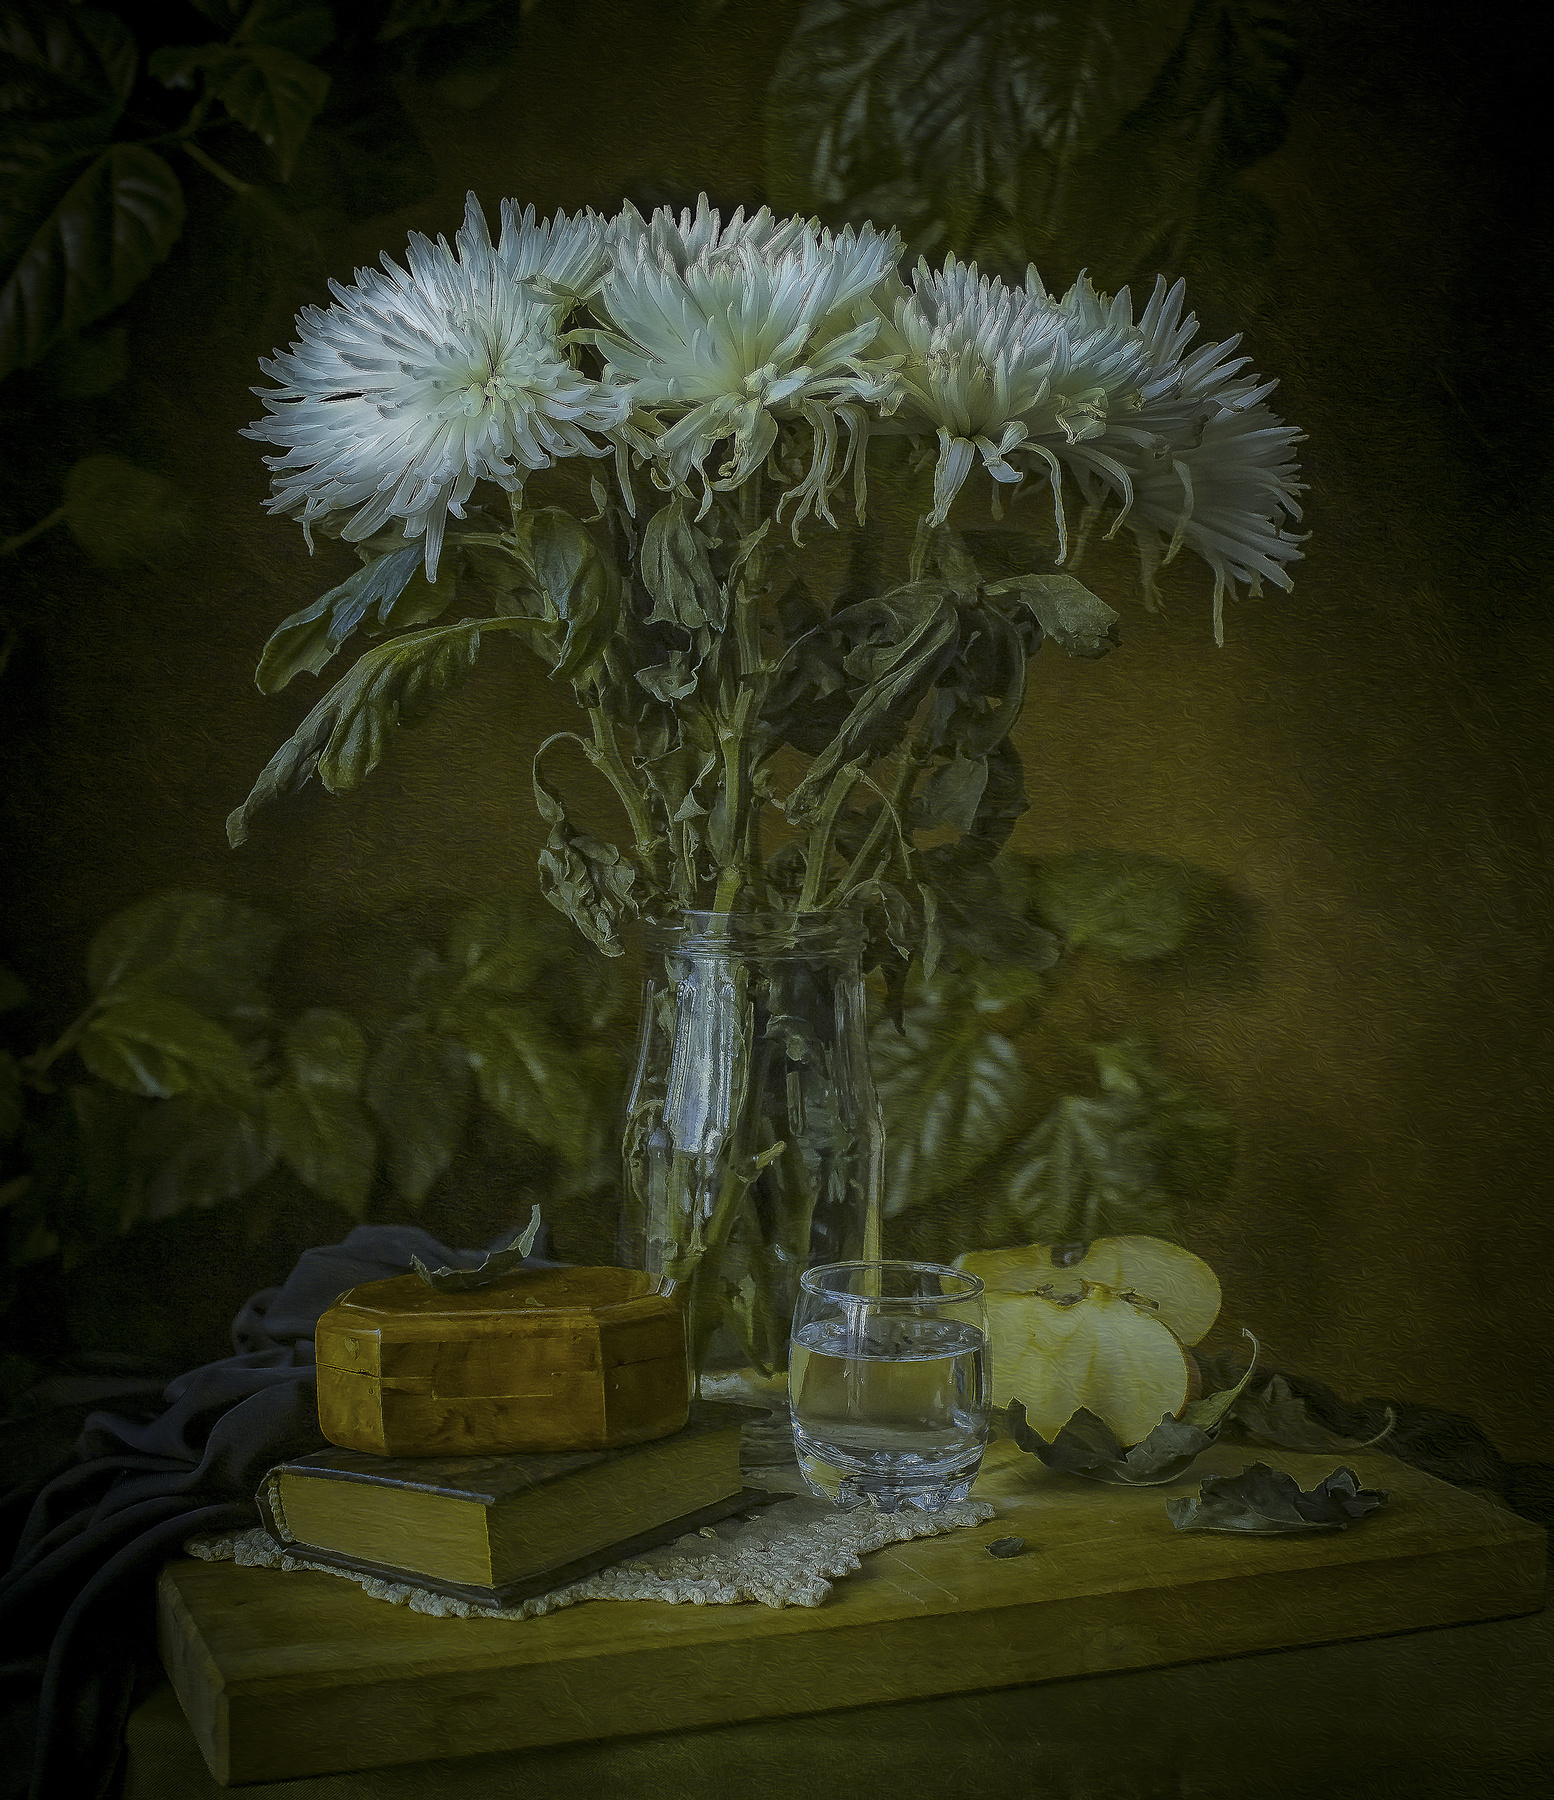 with chrysanthemums натюрморт хризантемы стакан с водой книга драпировка